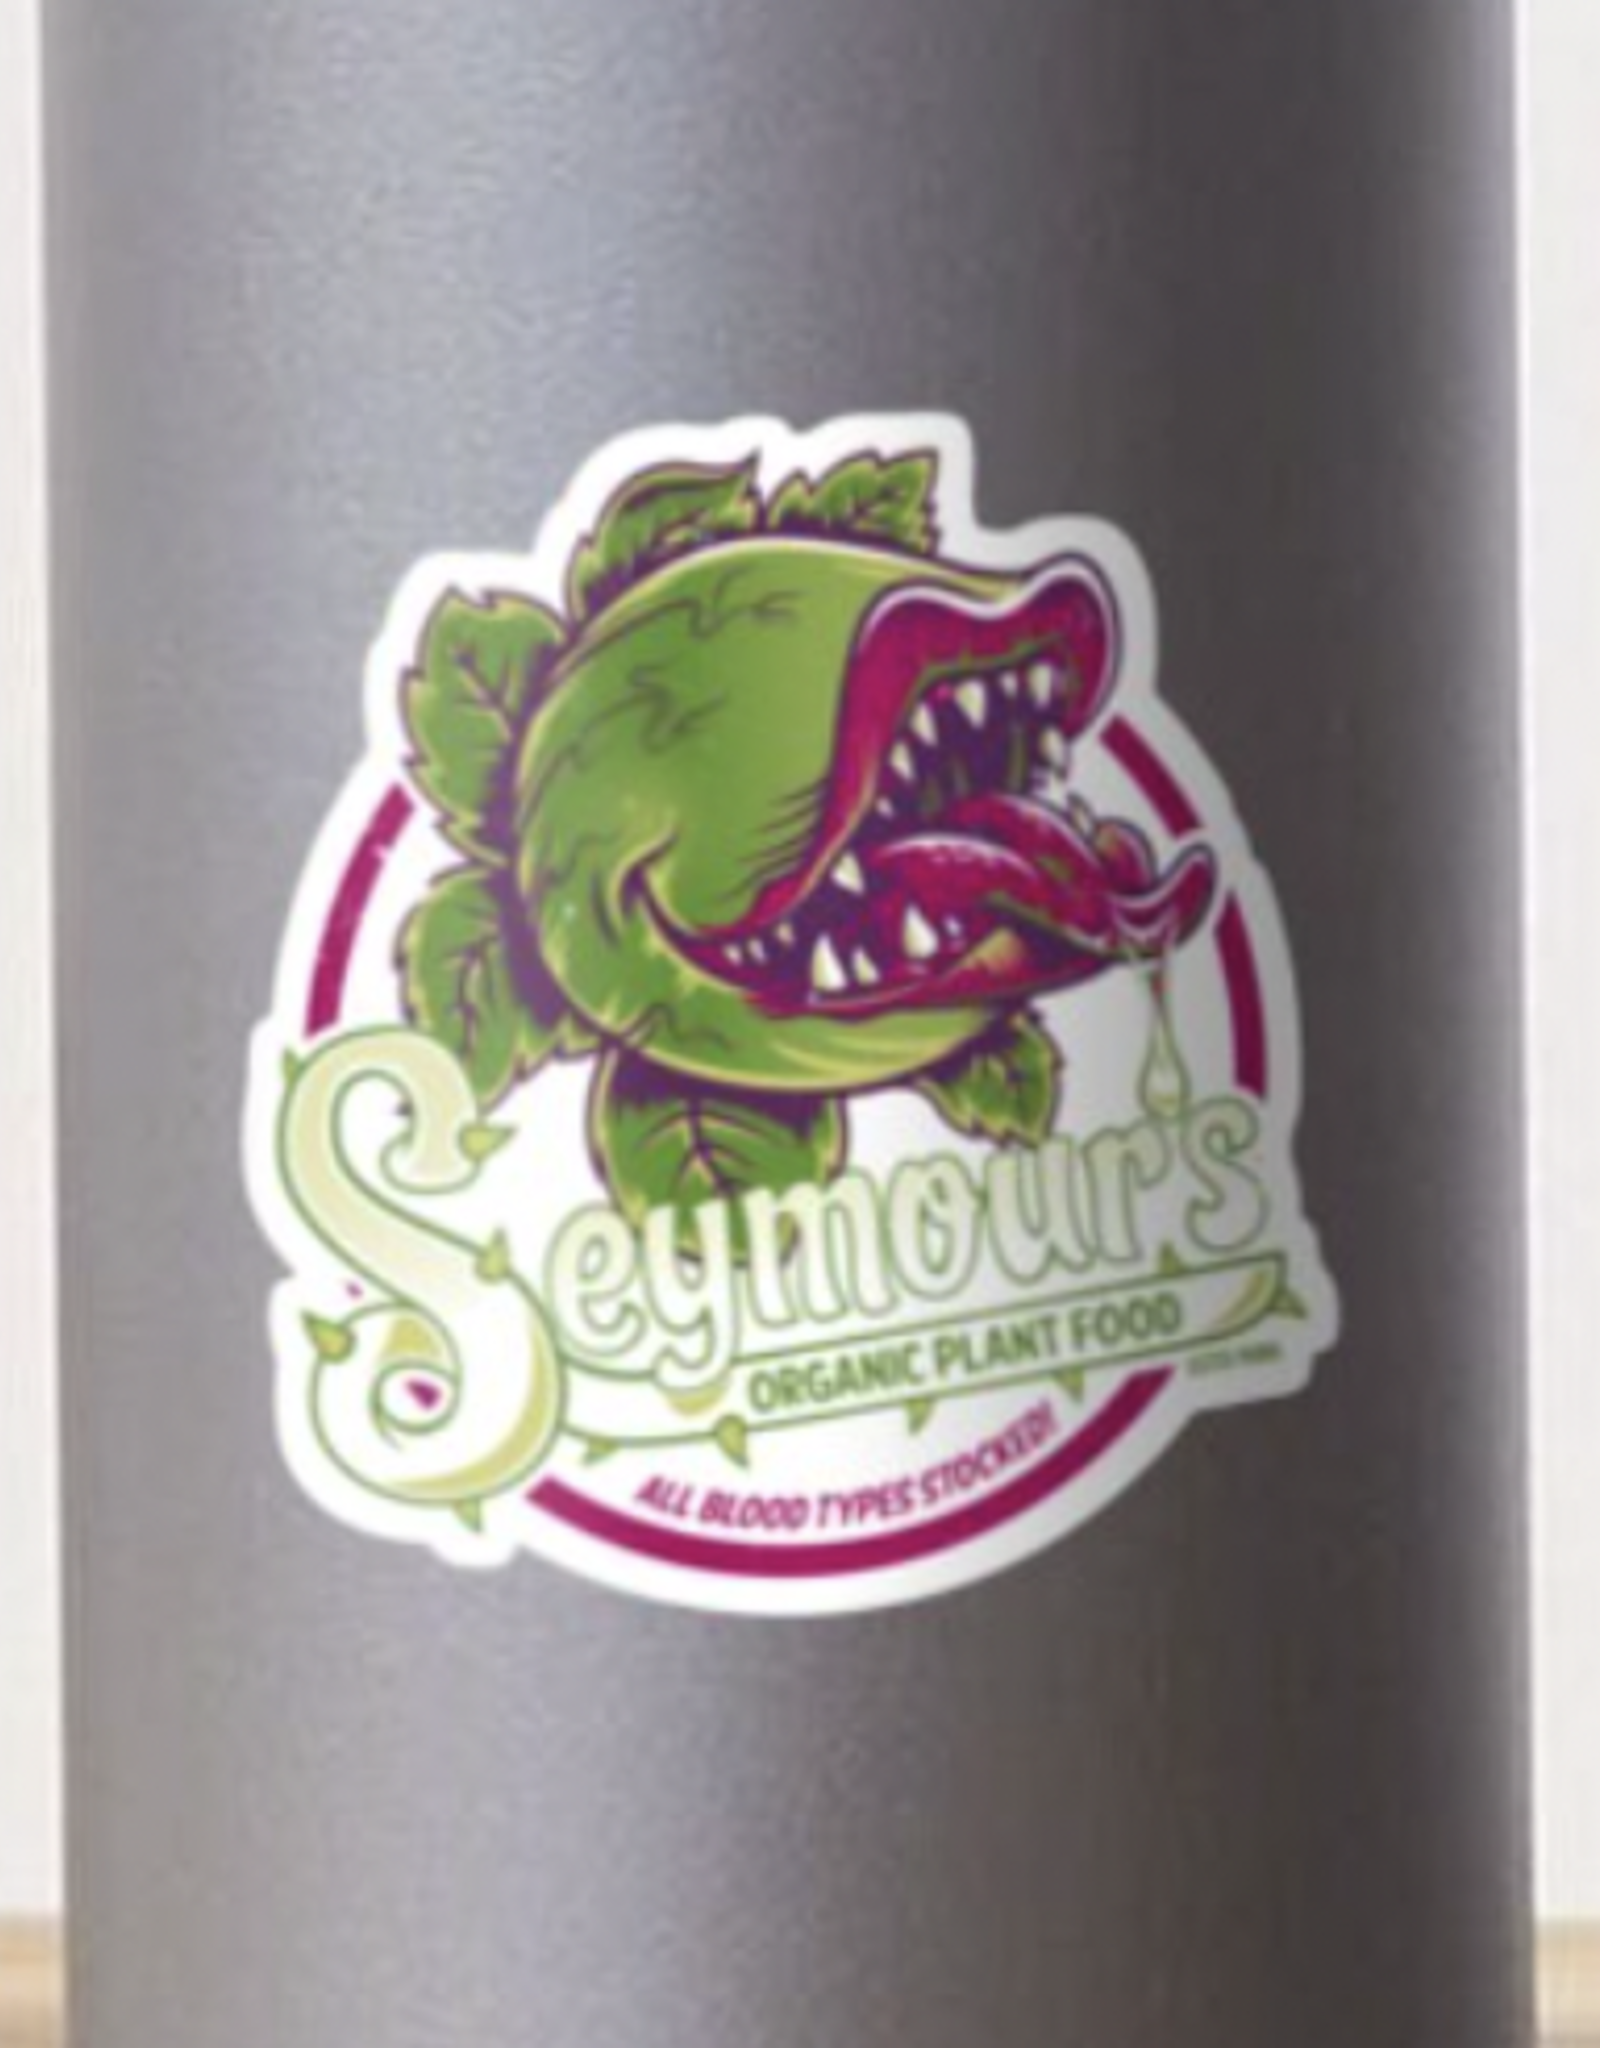 Seymour's Organic Plant Food Sticker